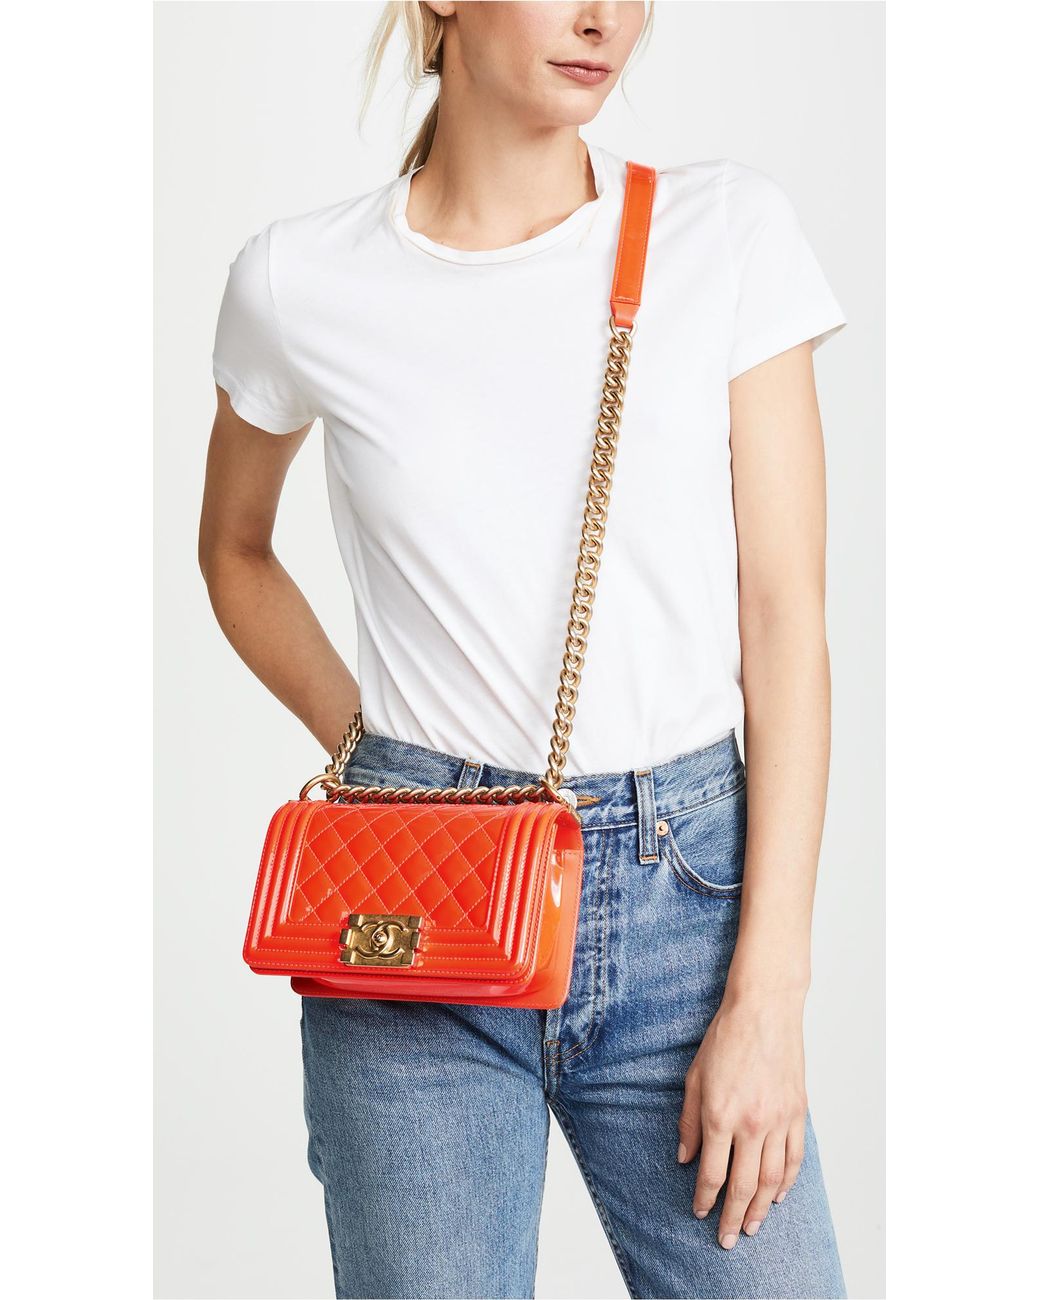 Chanel Orange Quilted Patent Leather Classic Rectangular Mini Flap Bag   Yoogis Closet